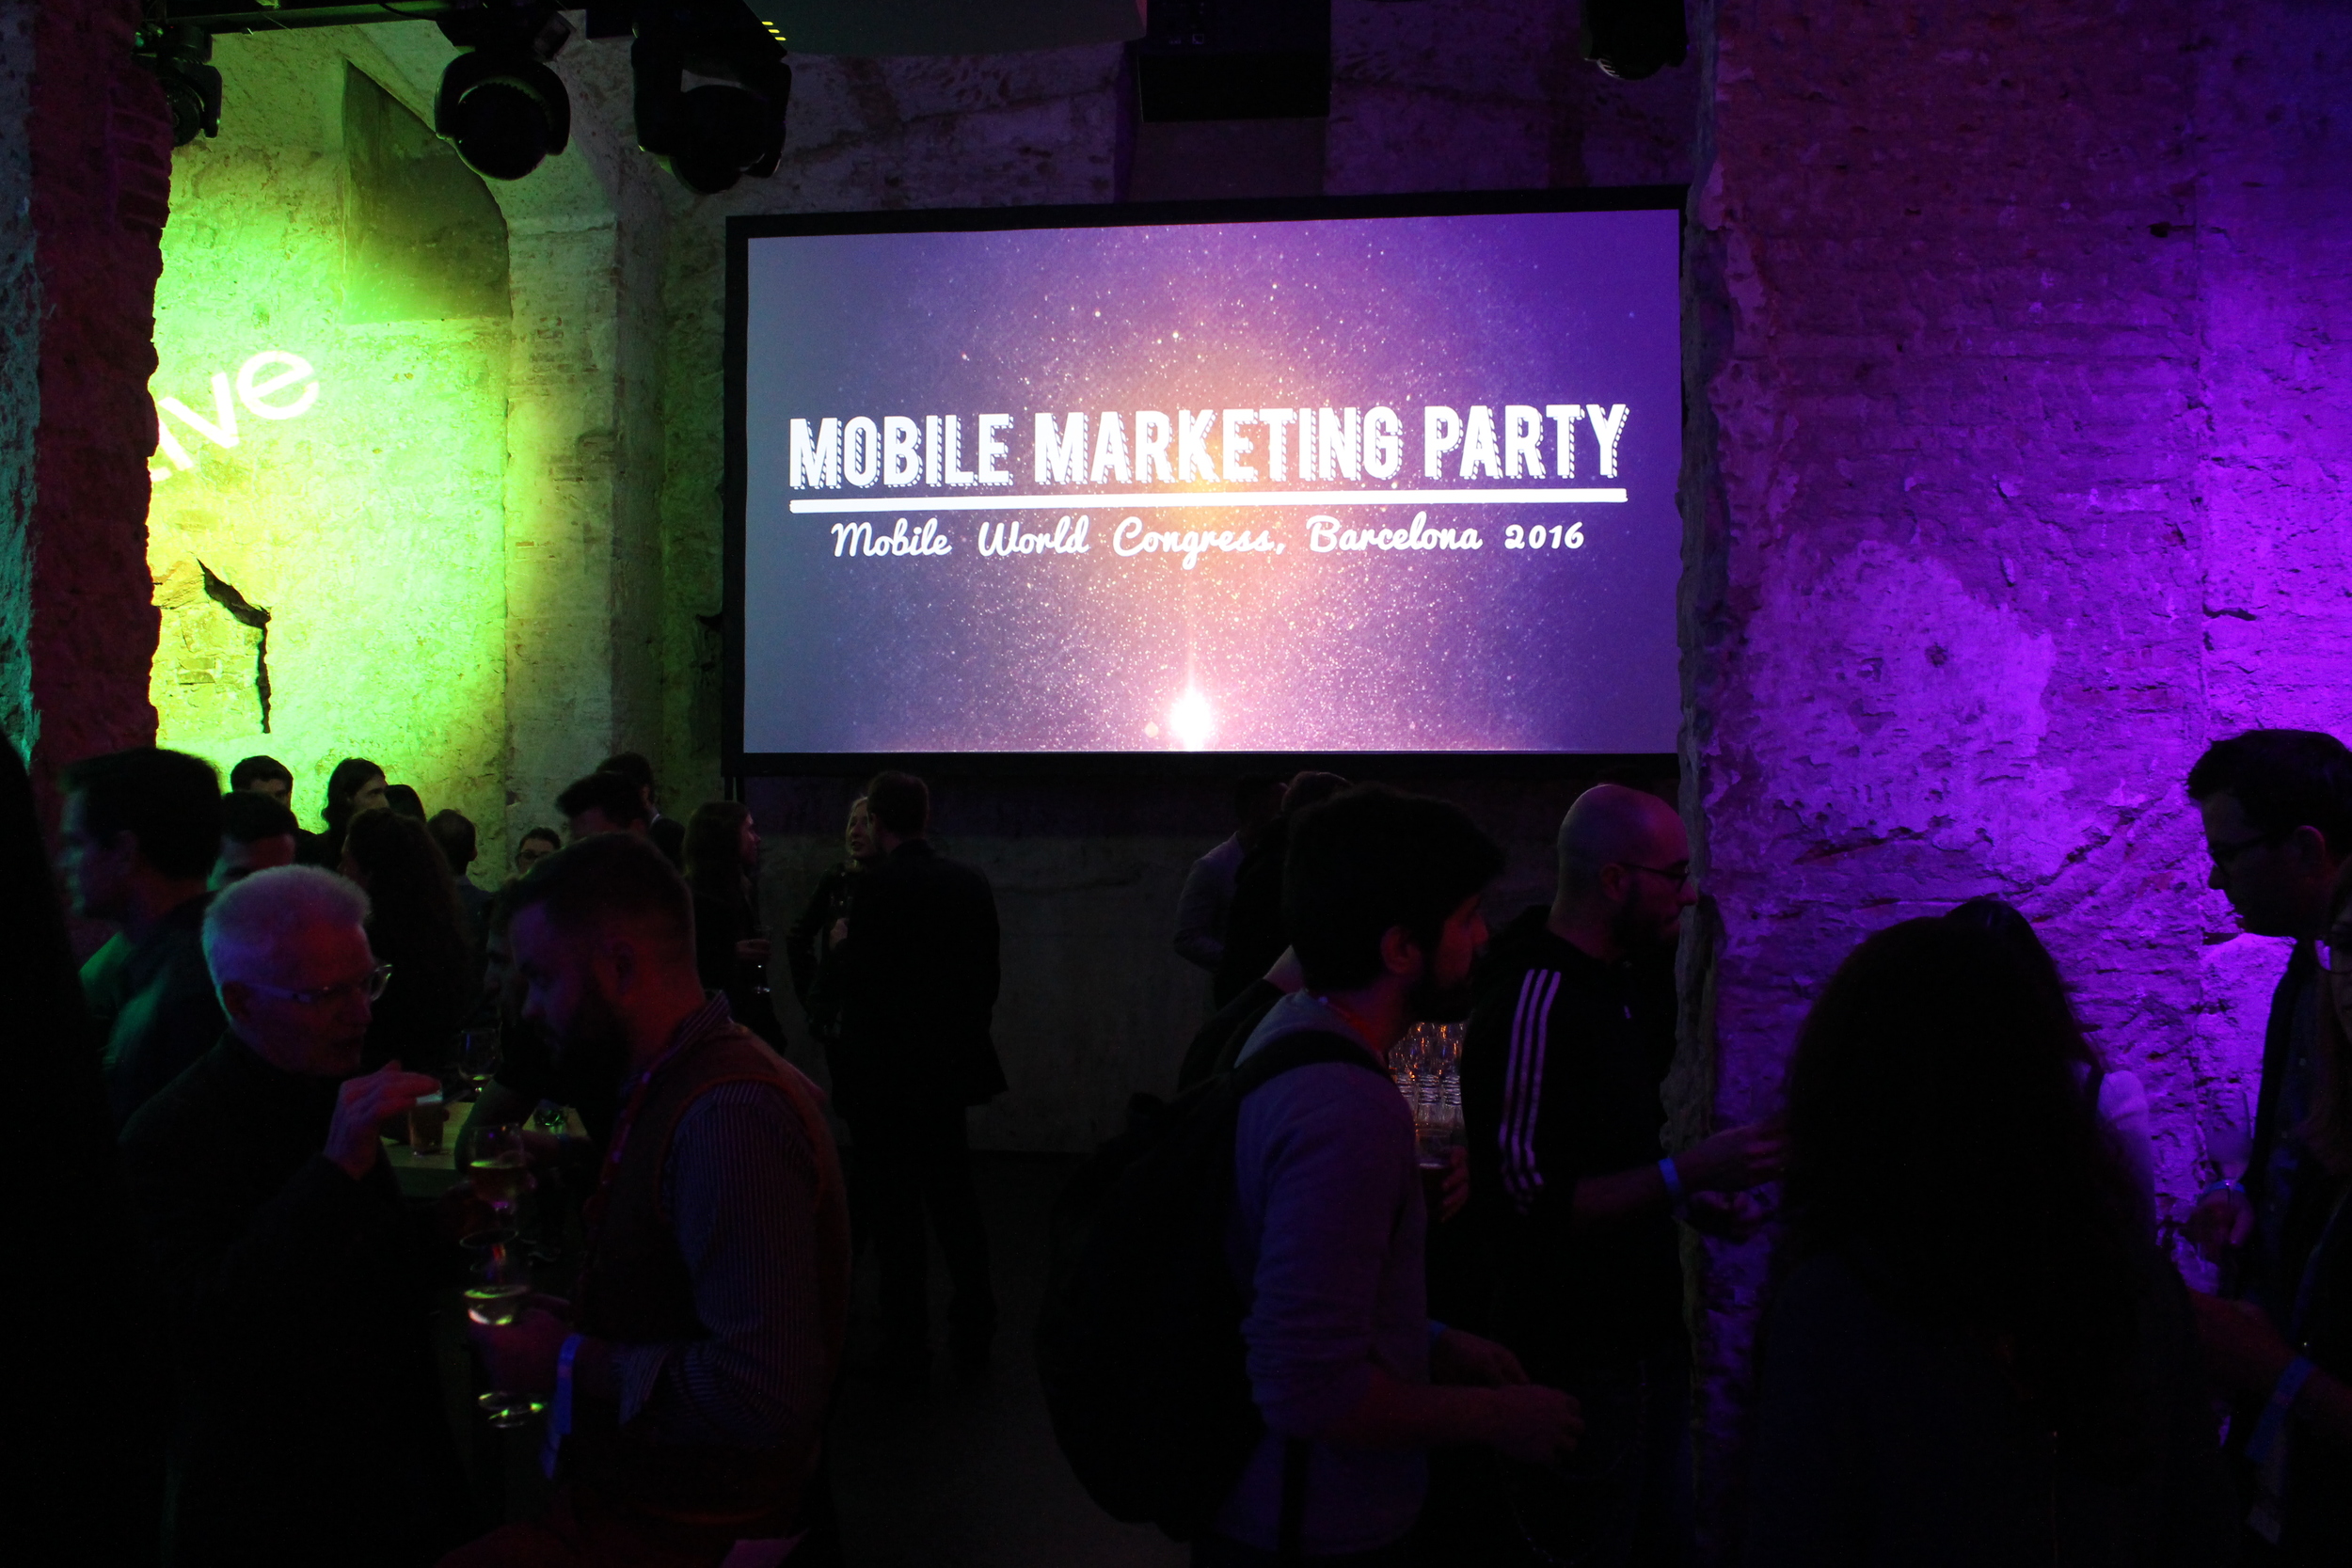 Mobile Marketing Party Kicks Off!